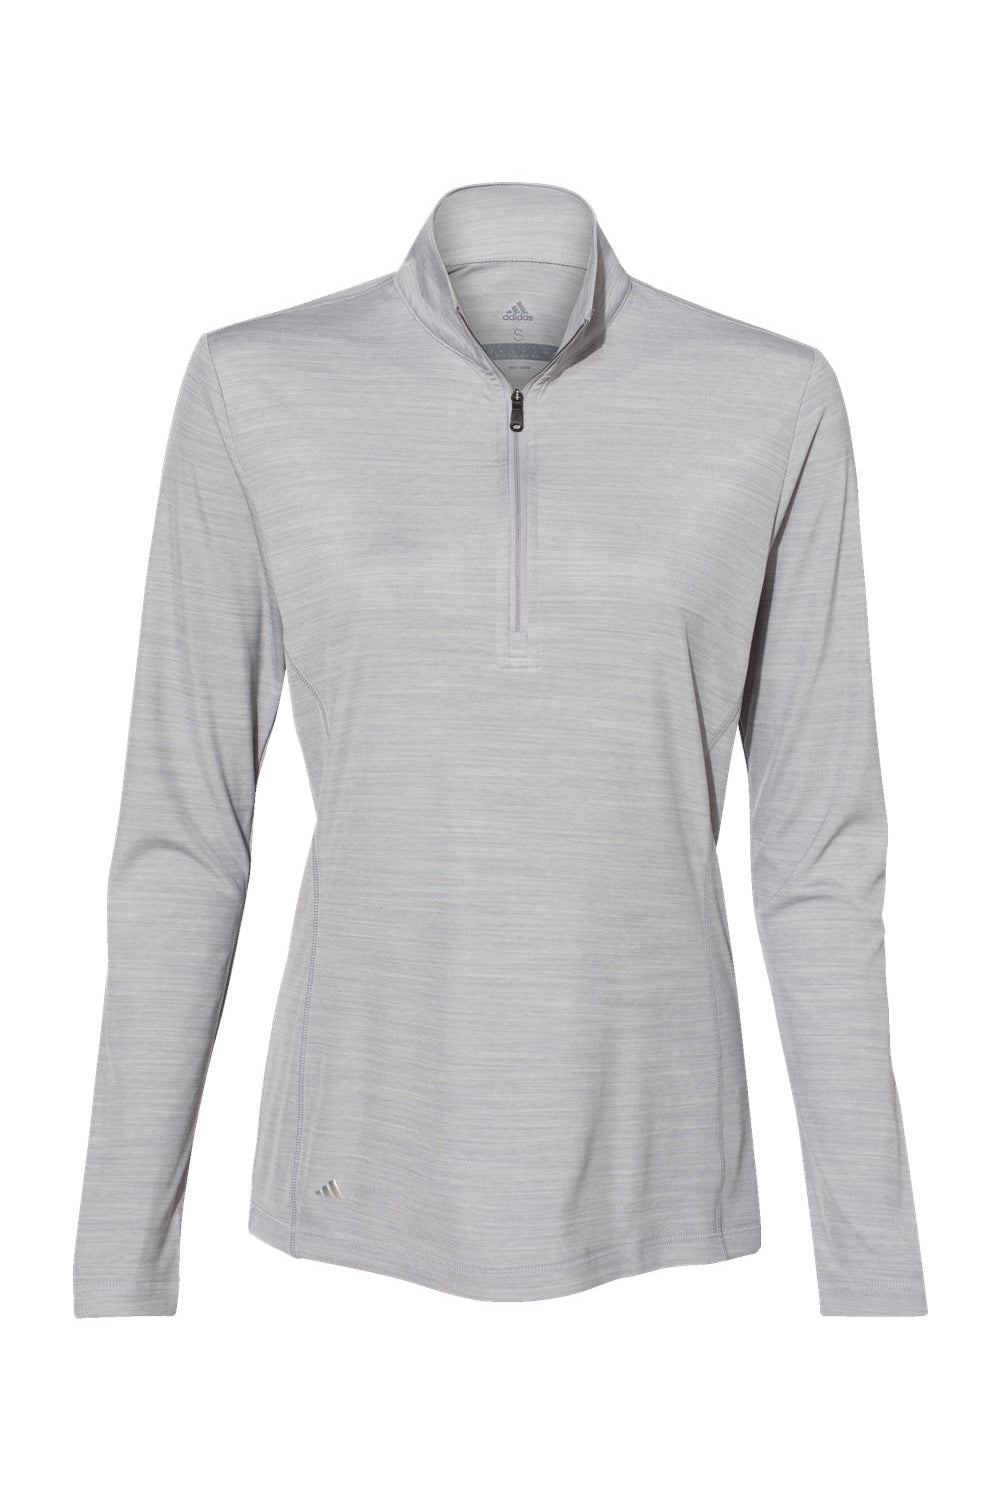 Adidas A476 Womens Moisture Wicking 1/4 Zip Sweatshirt Mid Grey Melange Flat Front